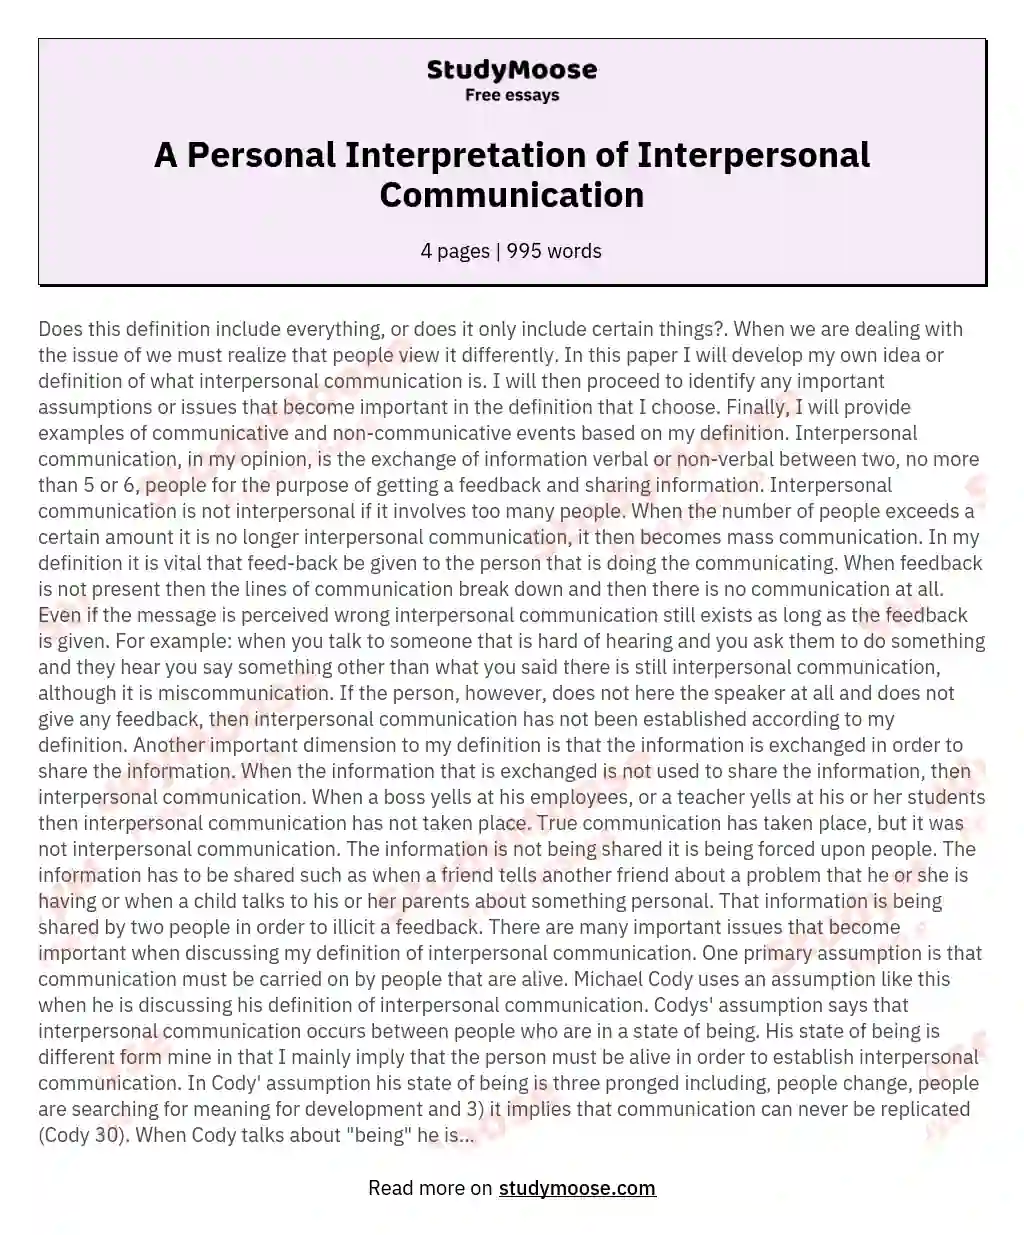 A Personal Interpretation of Interpersonal Communication essay